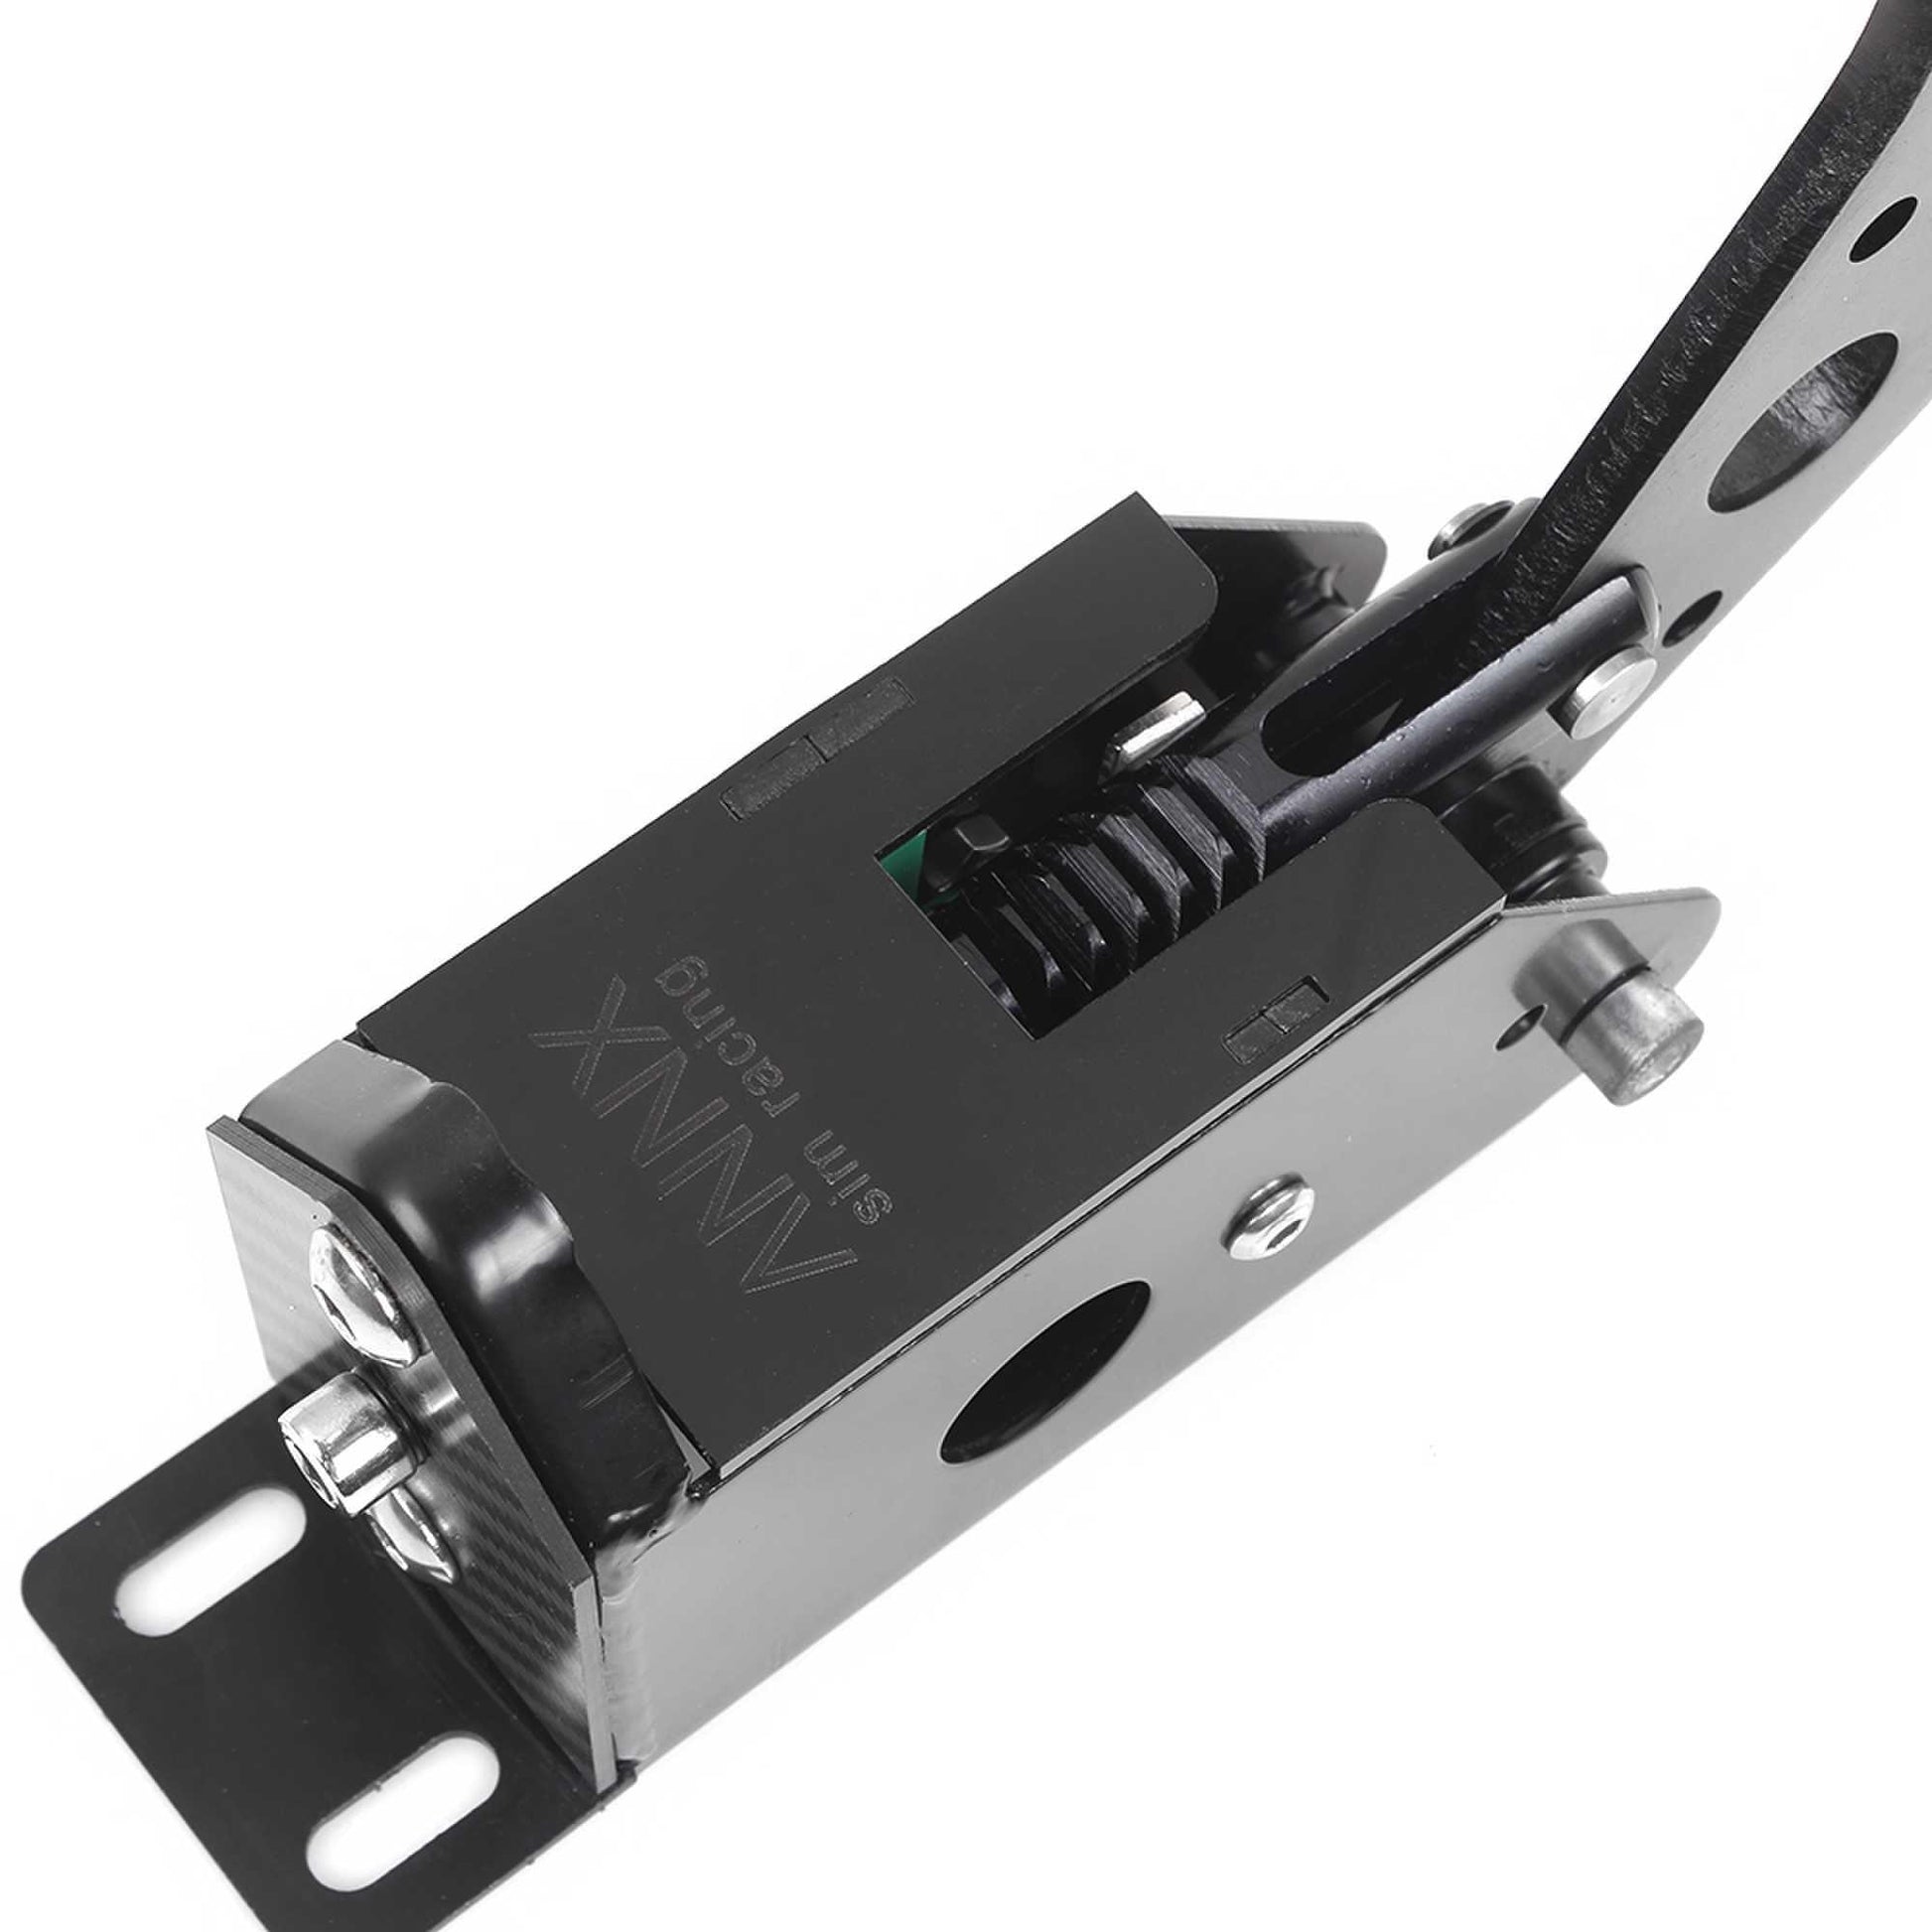 RASTP 14 Bit Hall Sensor USB SIM Handbrake for Racing Games G27 G29 G920 T300 T500 Fanatecosw LFS Dirt Rally - RASTP